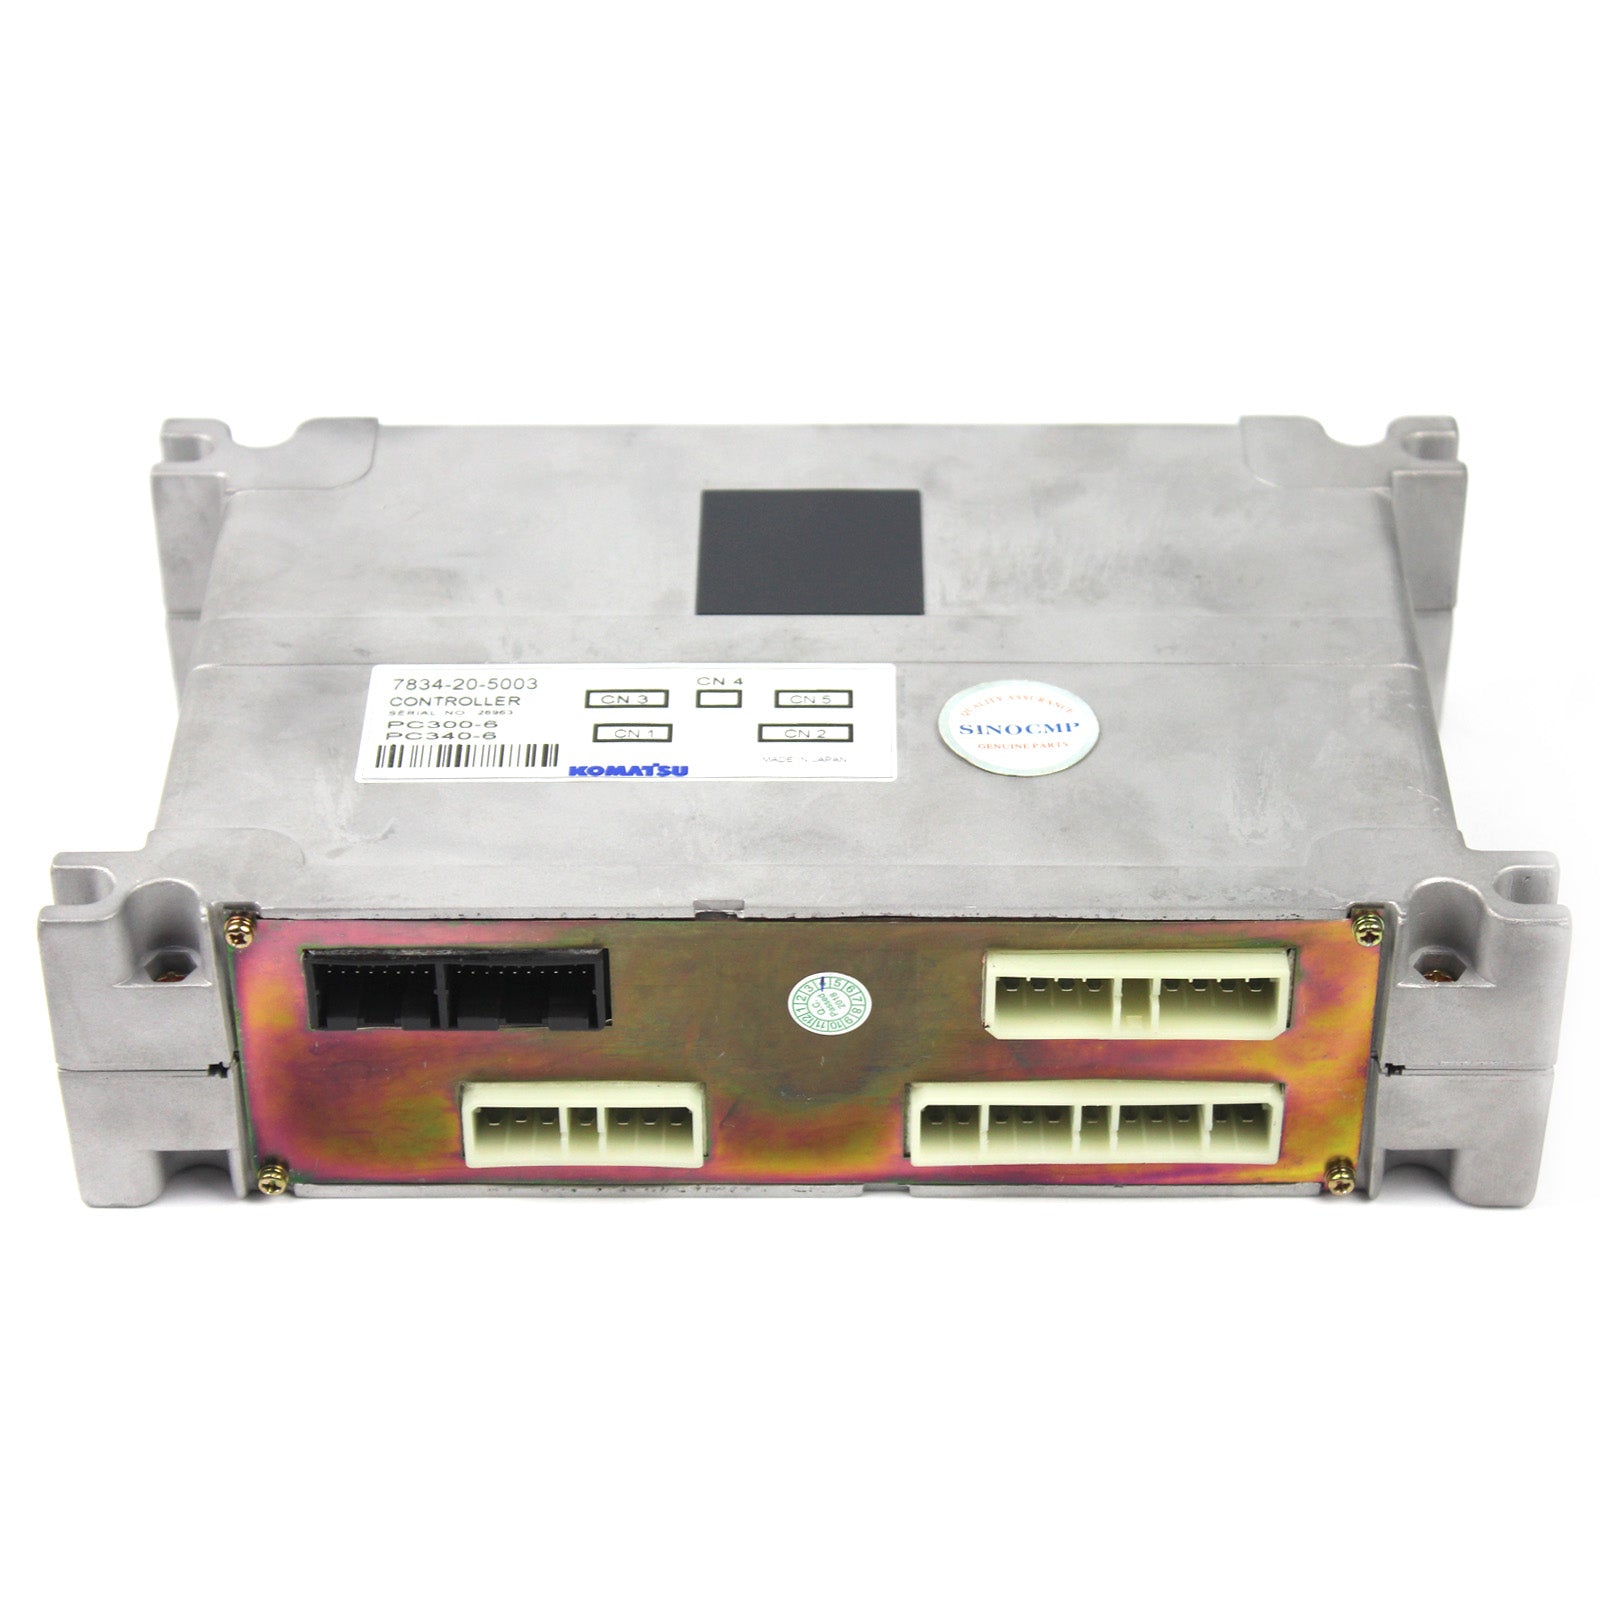 7834-20-2001 Controller for Komatsu PC350-6  PC300-6 PC400-6 PC450-6